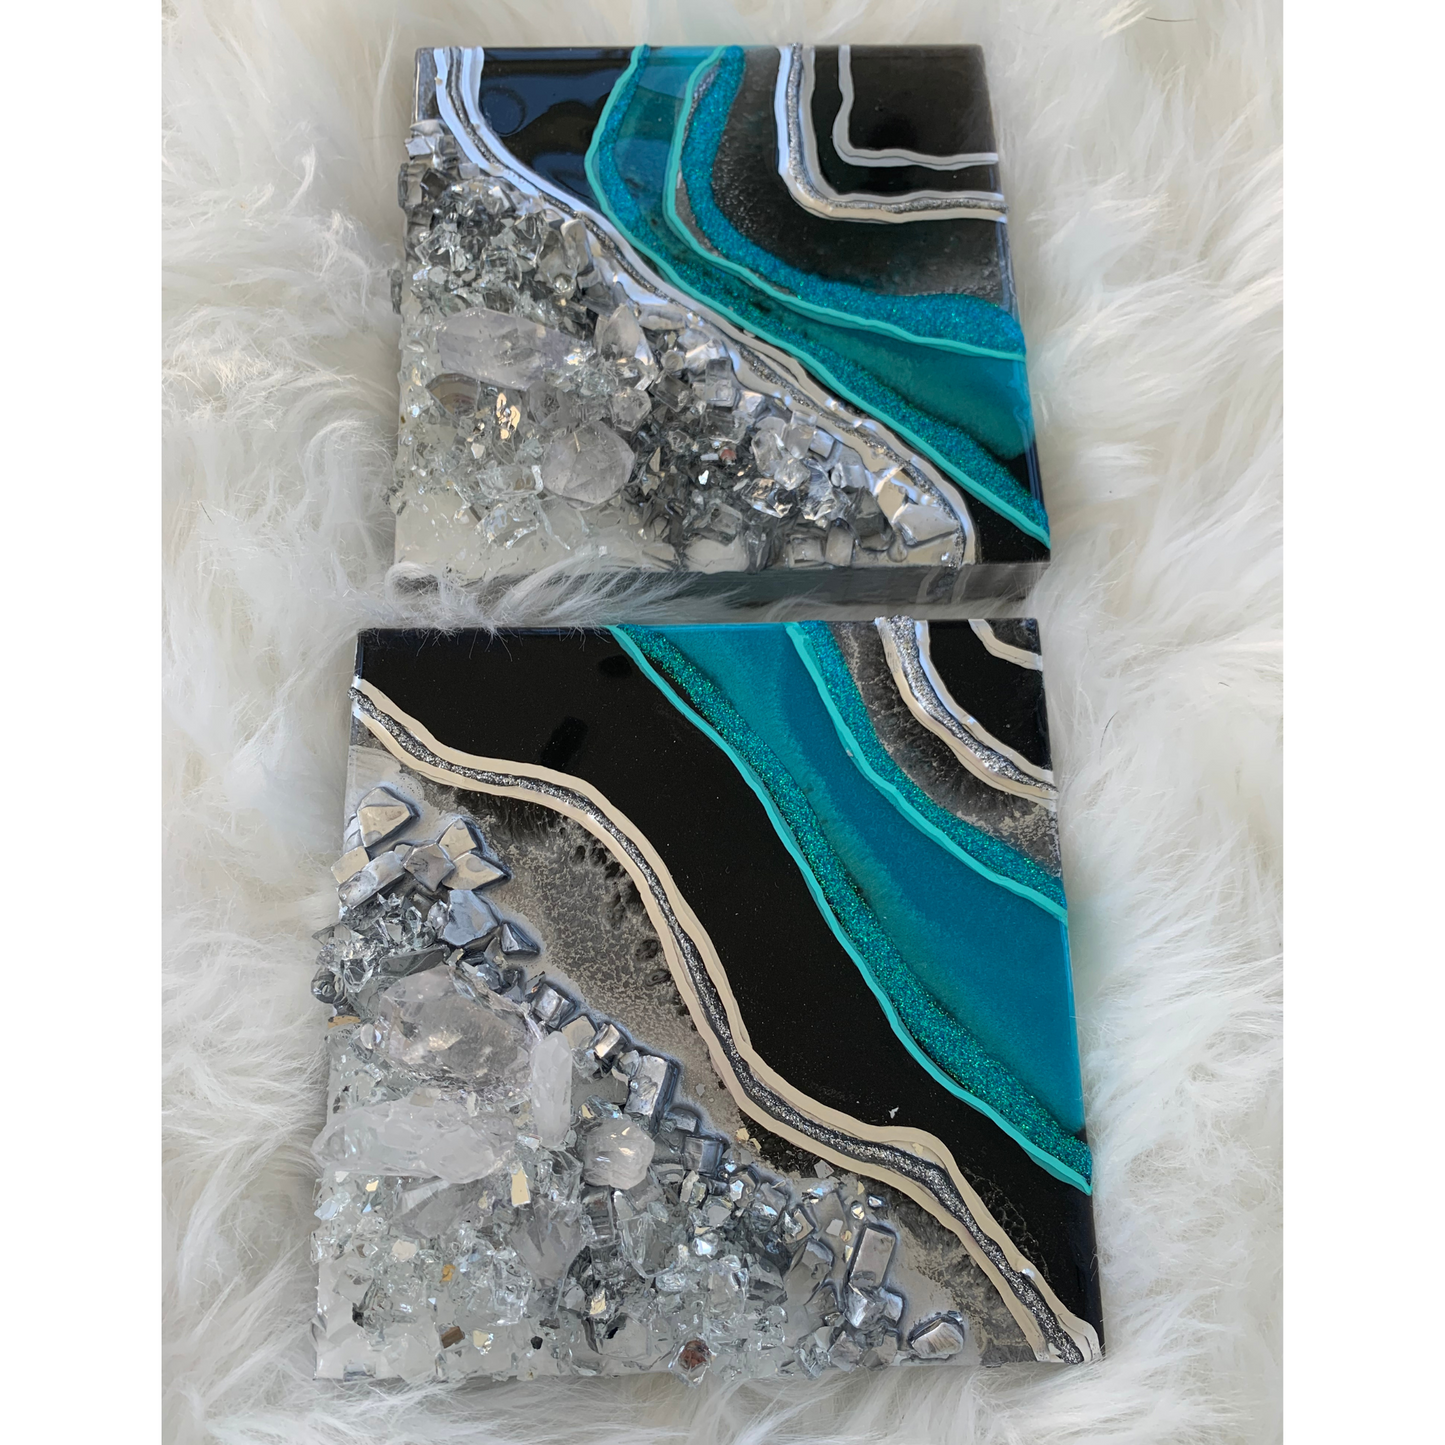 Twin Mini's Turquoise, Black & Crystal Quartz Geodes